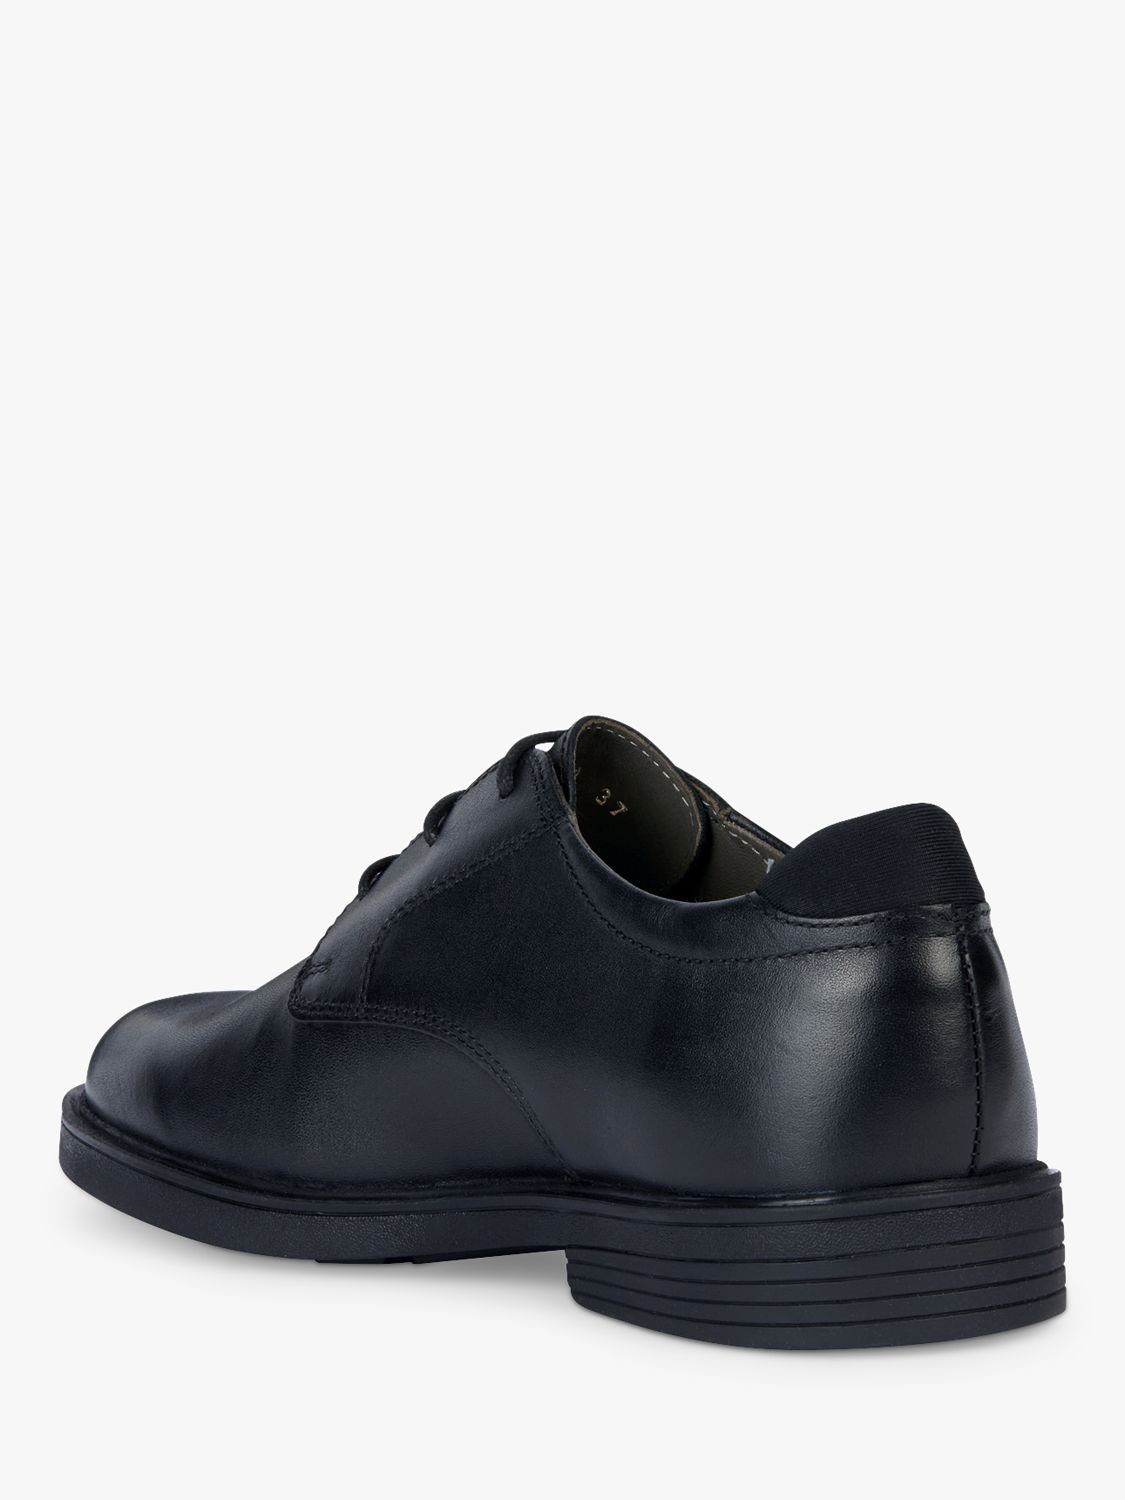 Geox Kids' Zheeno Oxford School Shoes, Black, 36